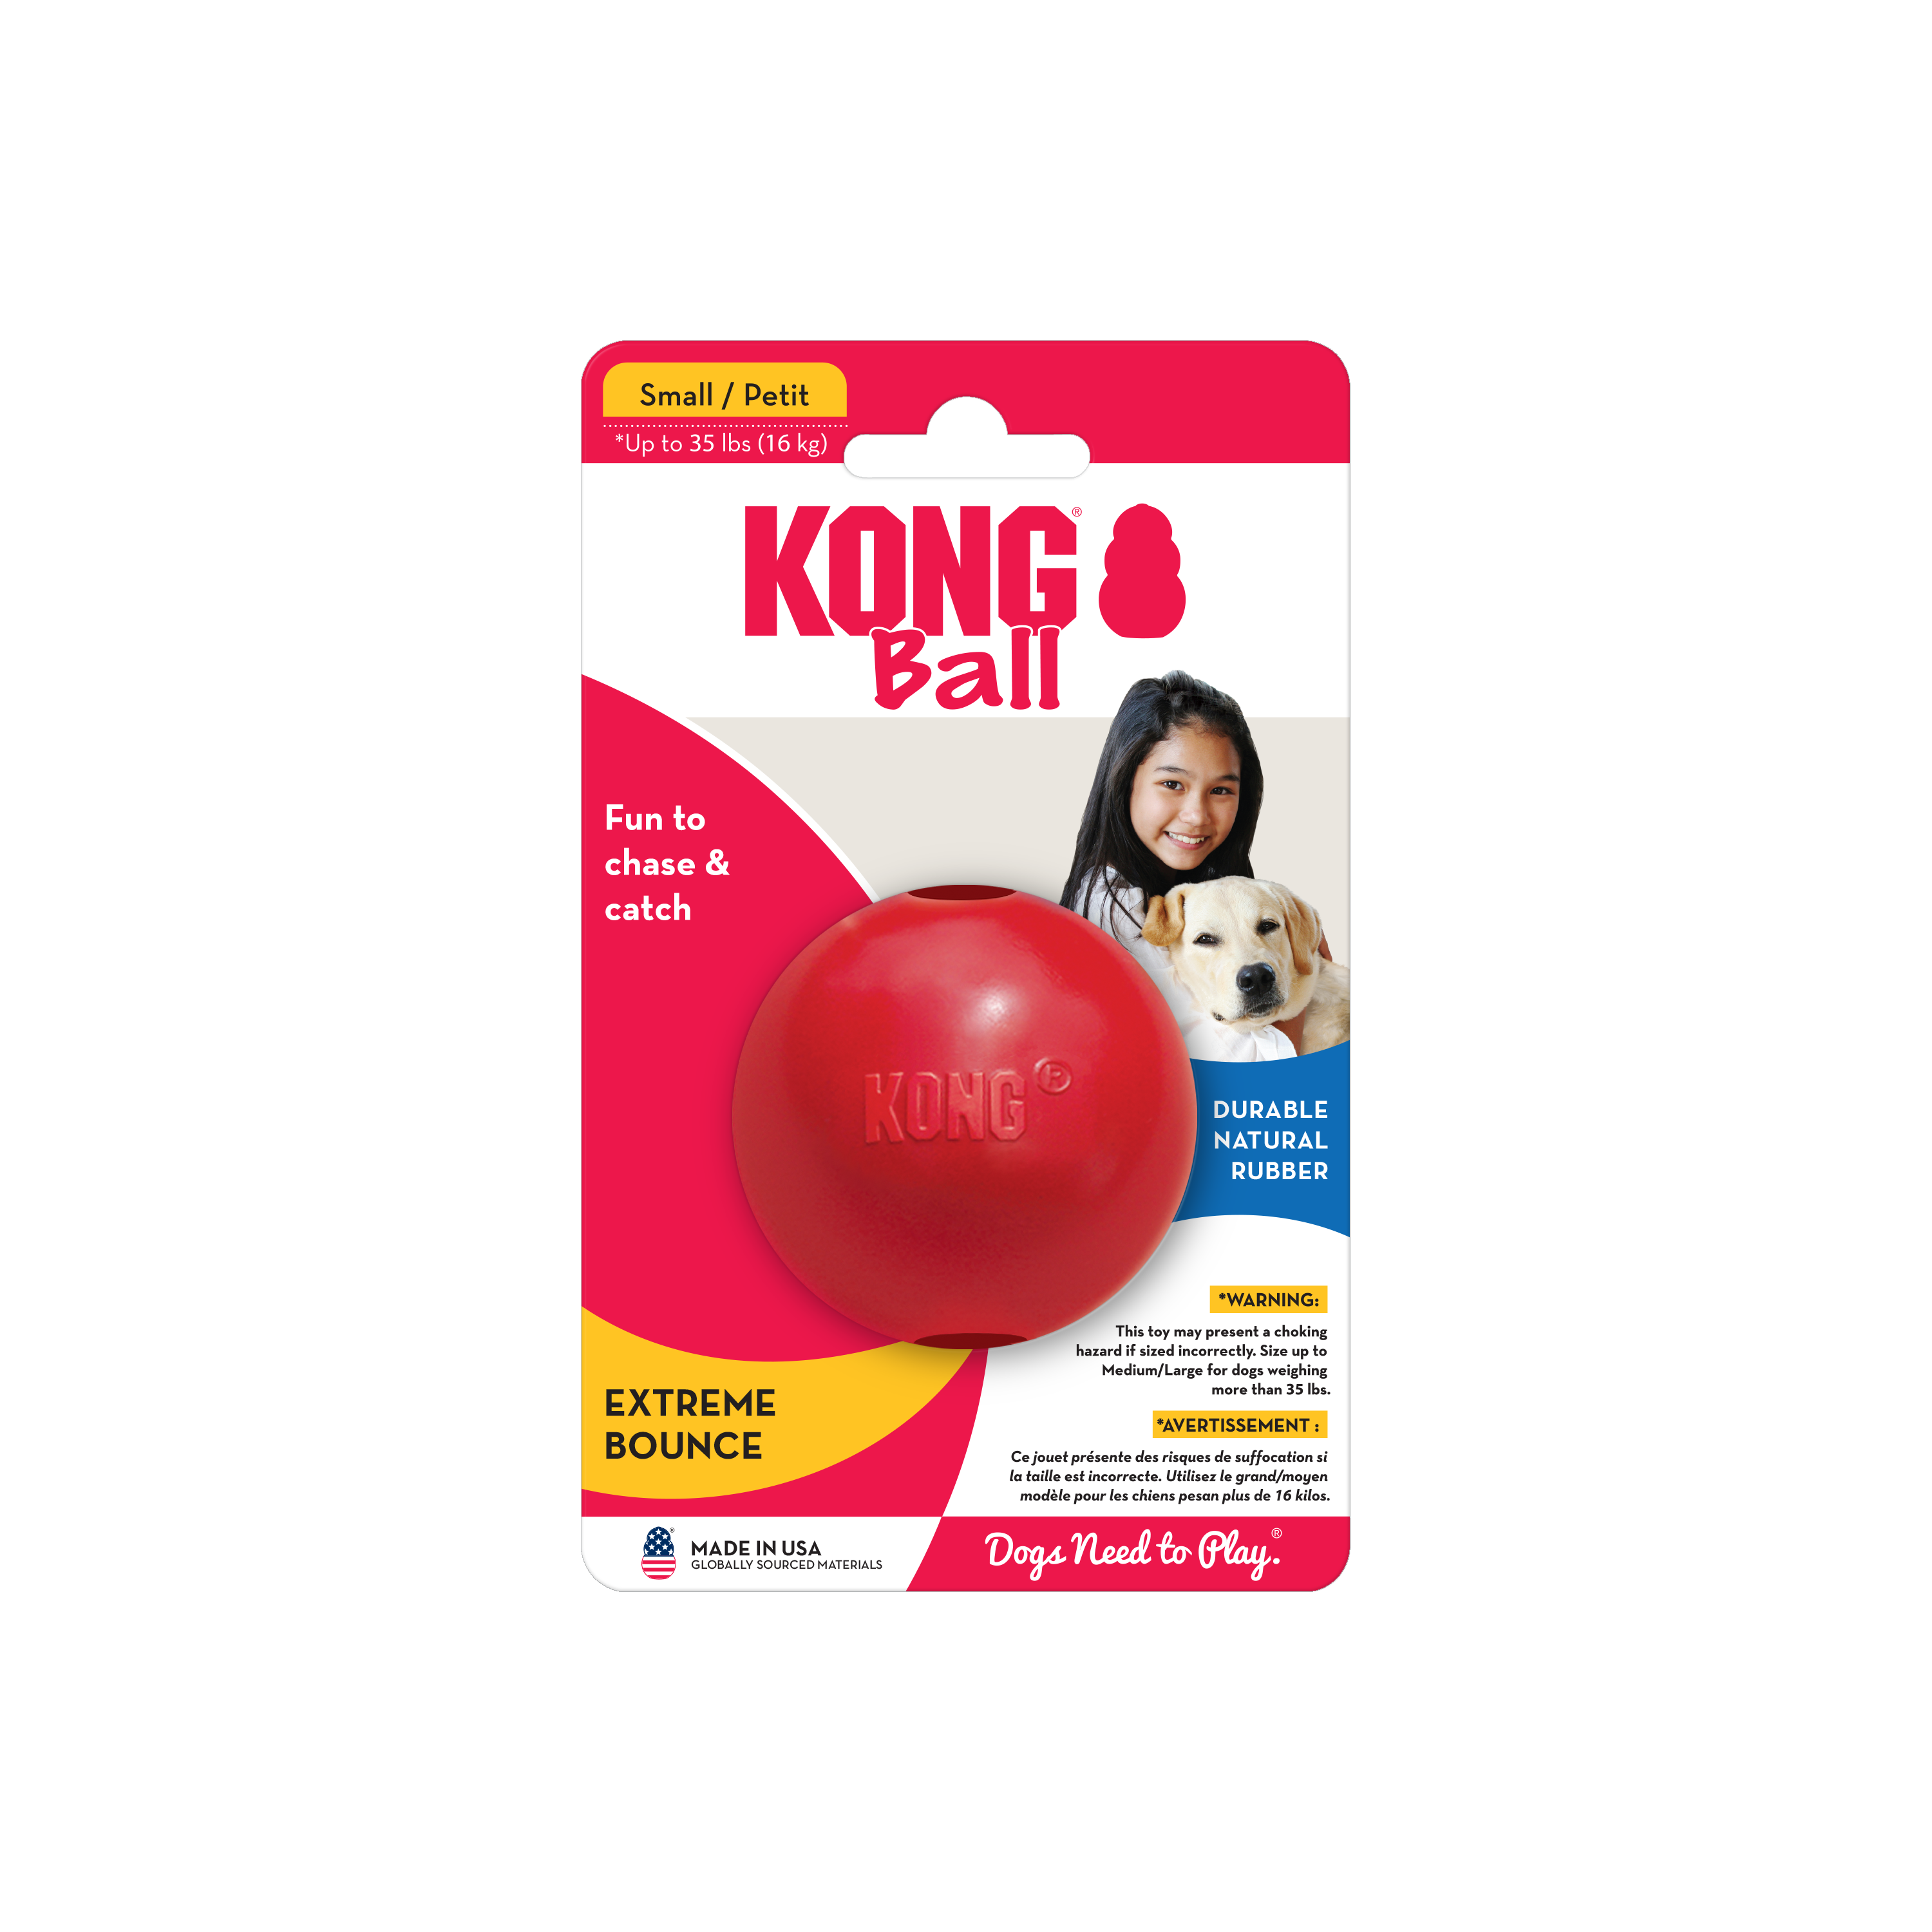 KONG Ball w/Hole onpack product image